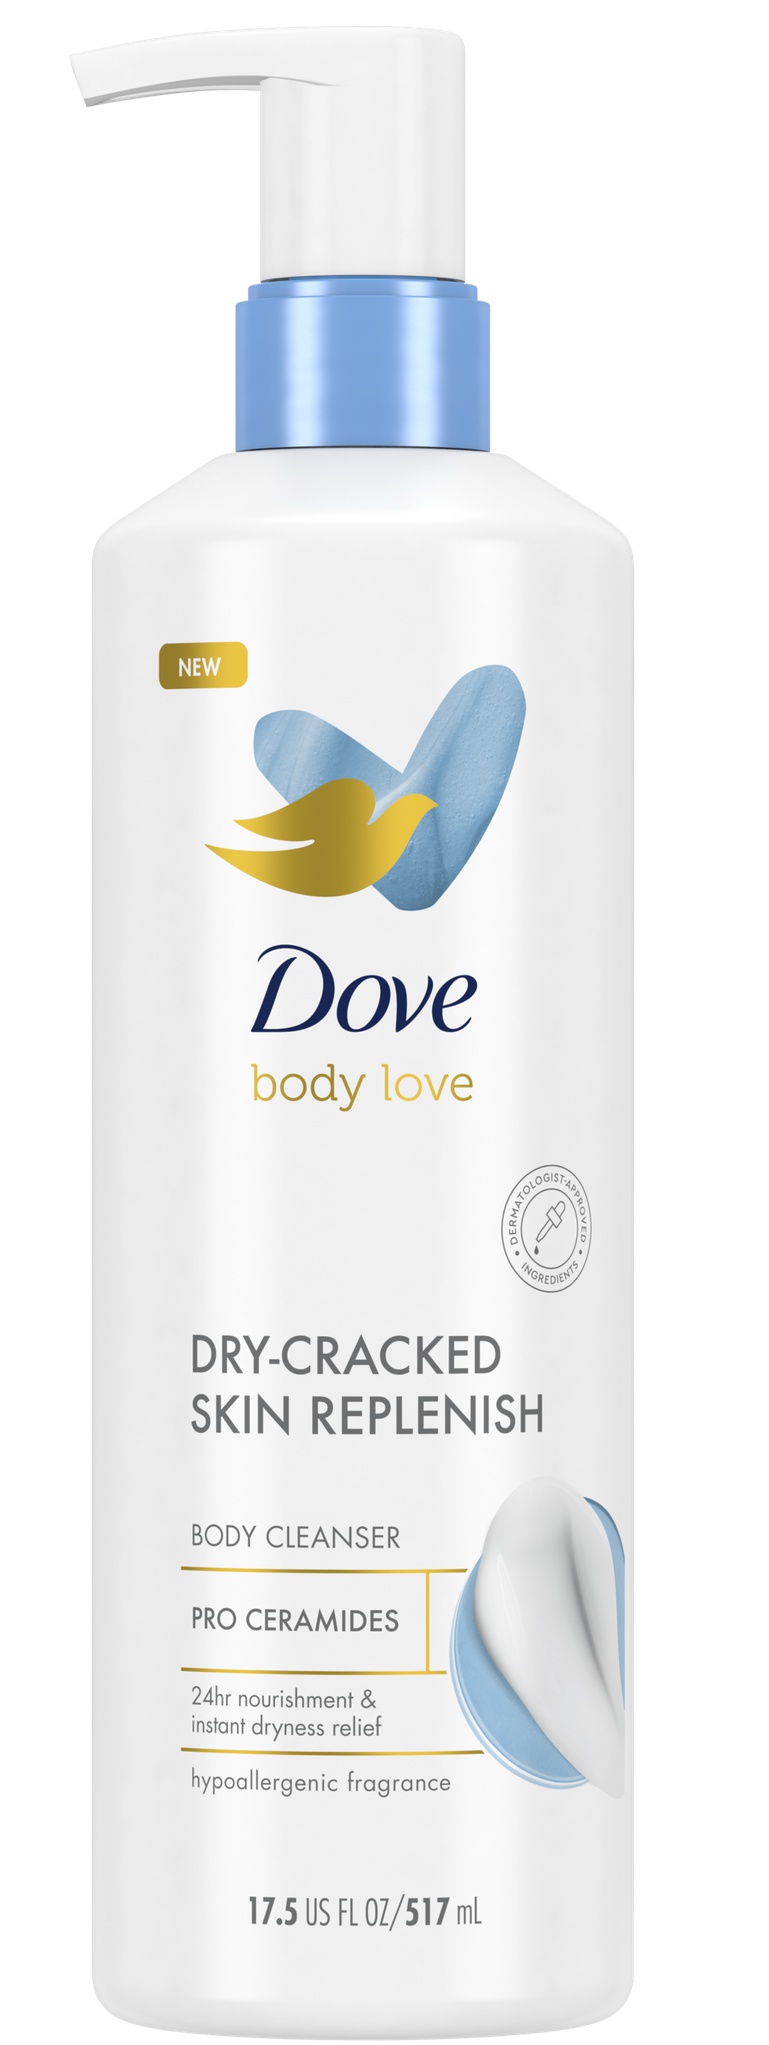 Dove Body Love Dry-cracked Replenish Body Cleanser